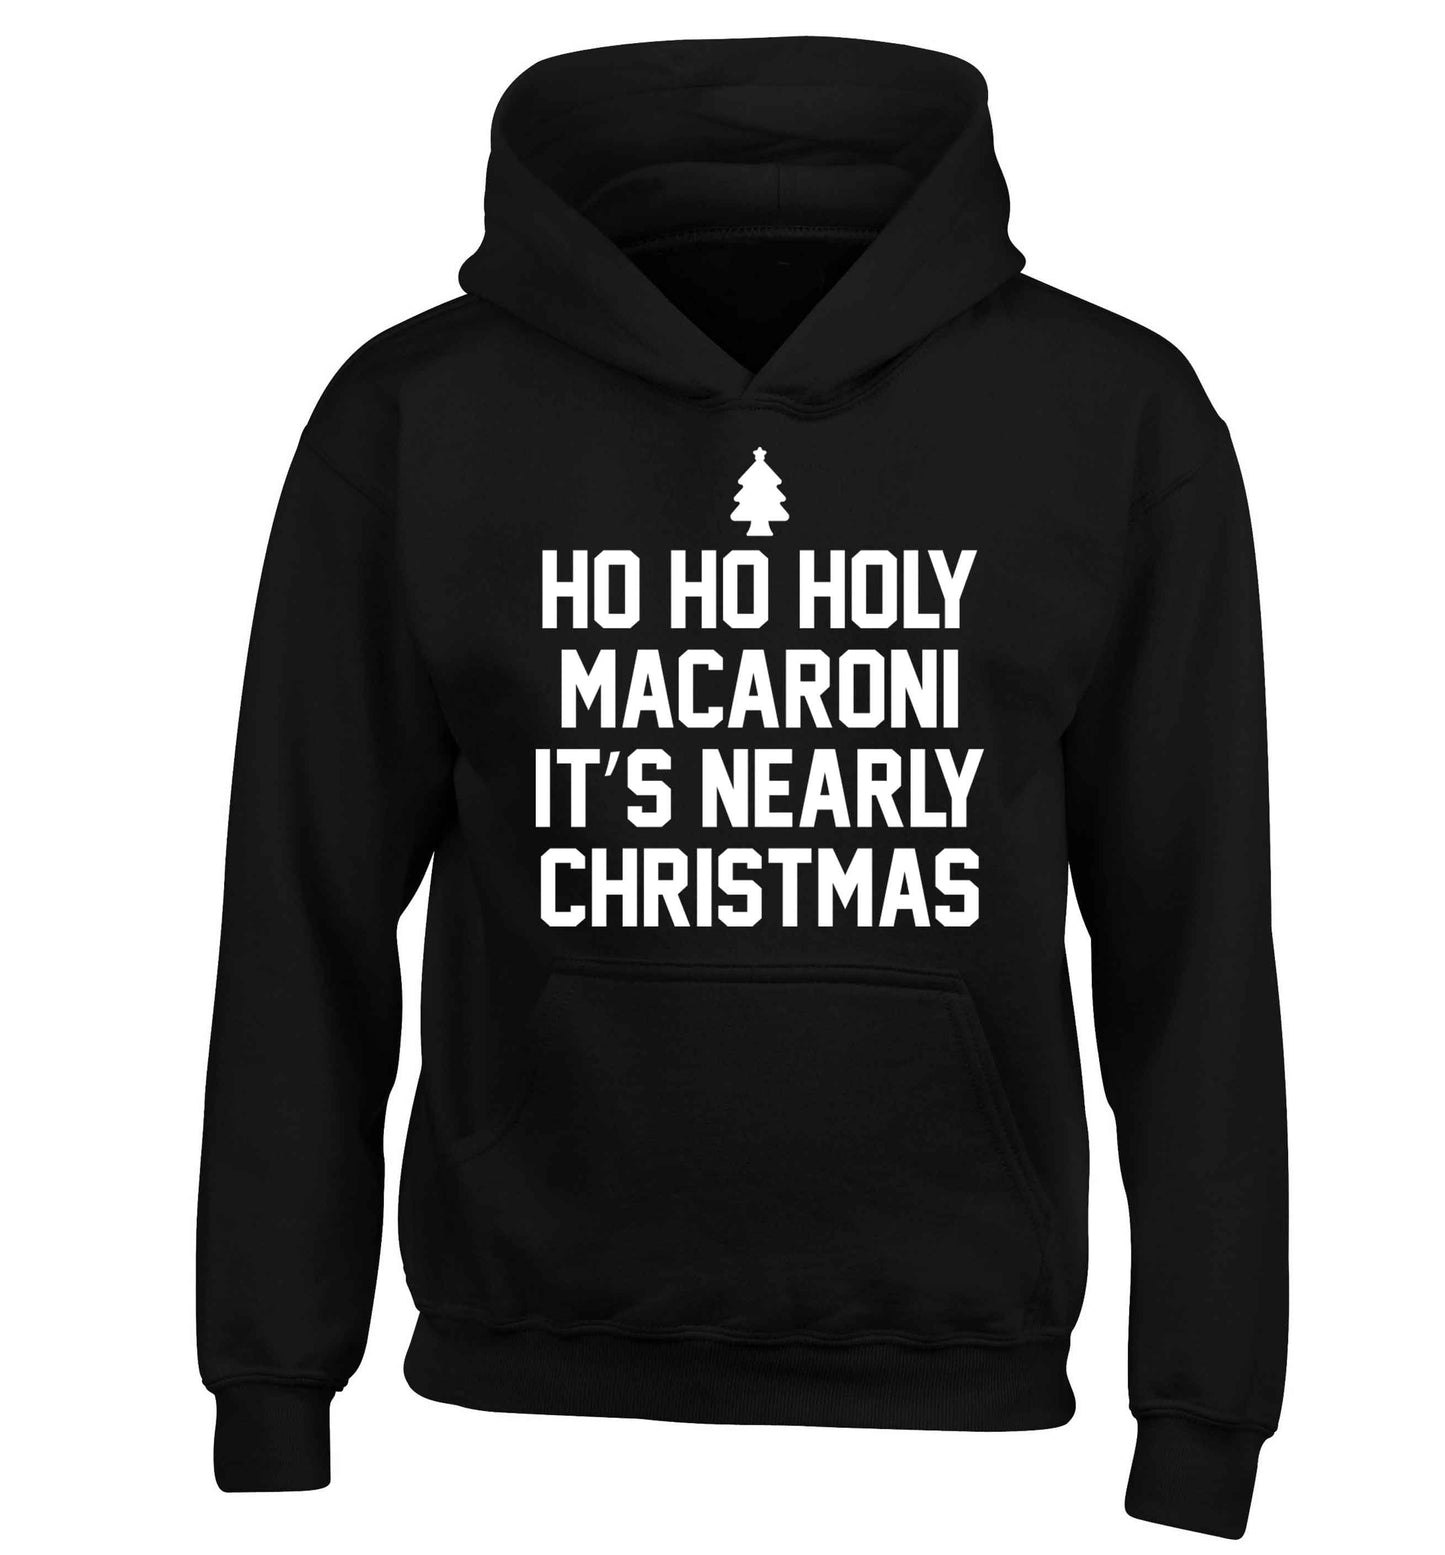 Ho ho holy macaroni it's nearly Christmas children's black hoodie 12-13 Years